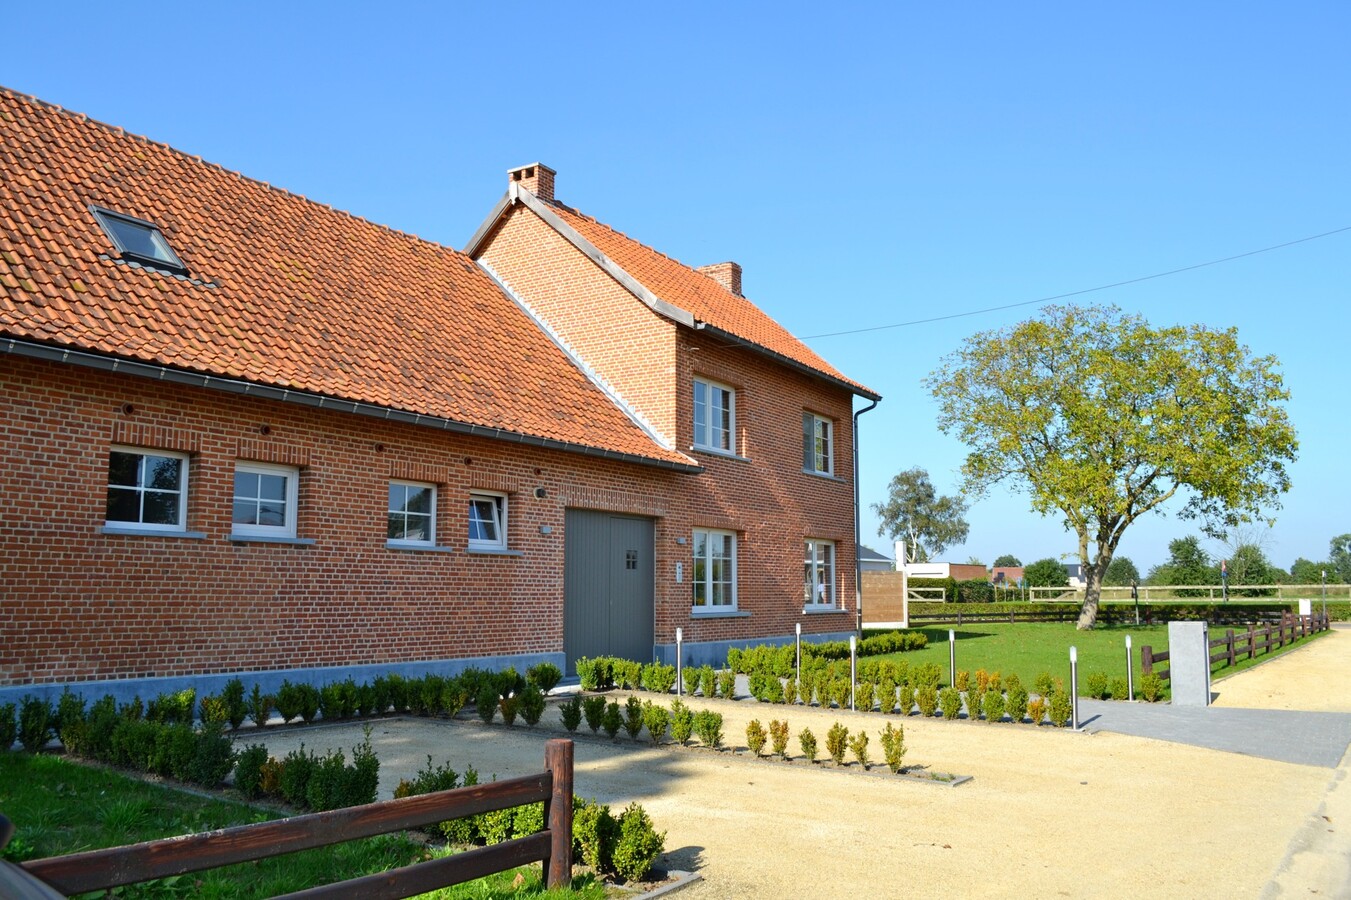 Property sold in Morkhoven